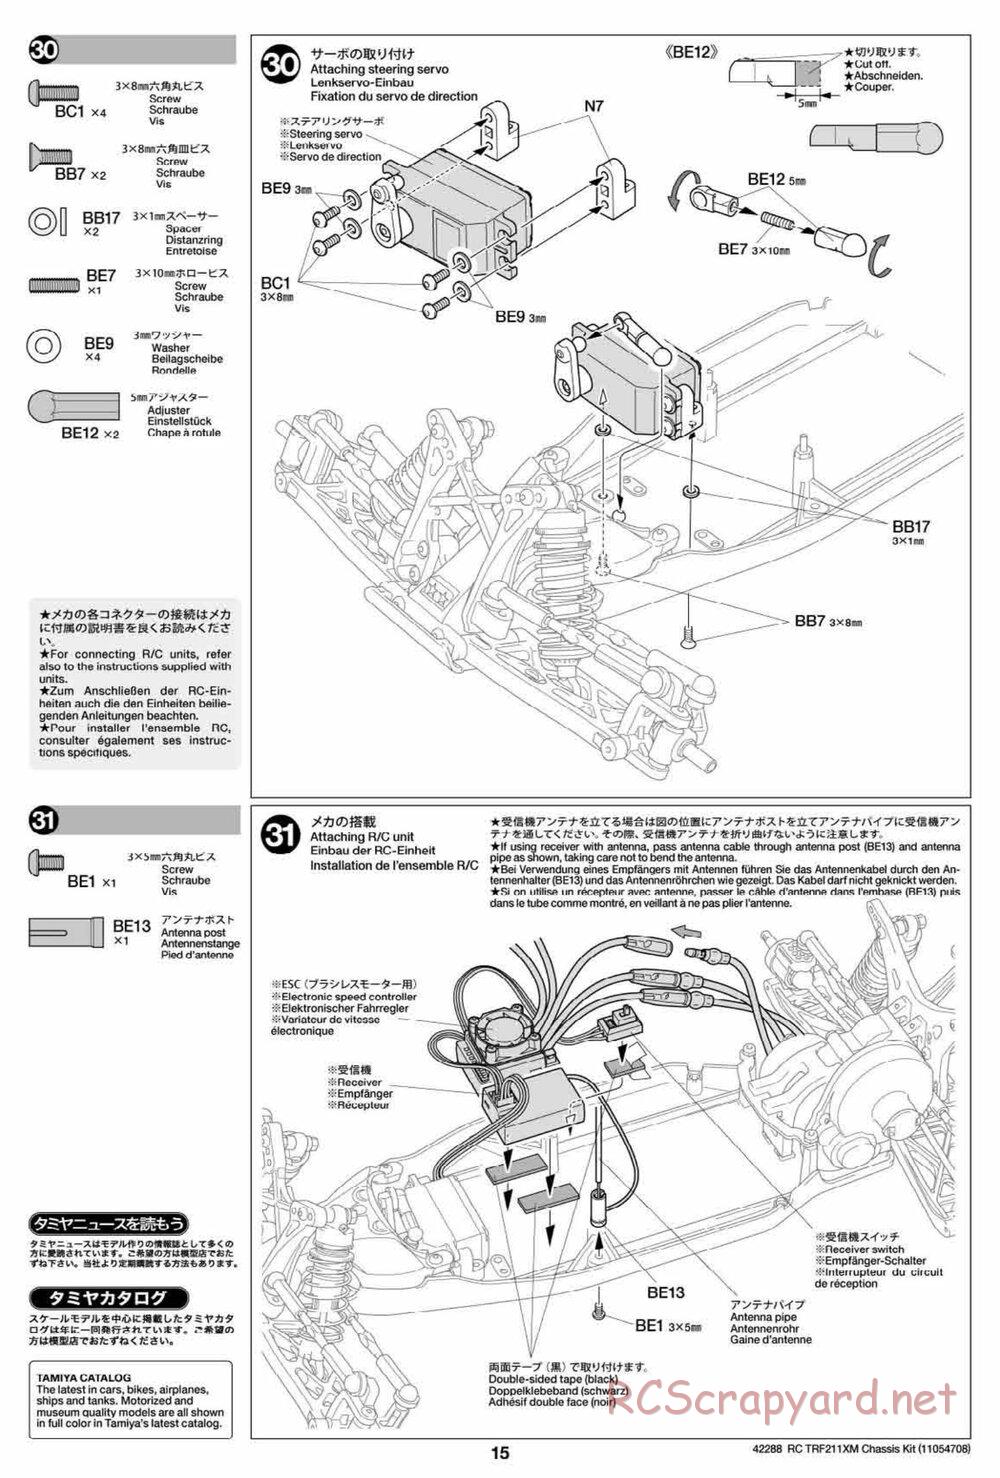 Tamiya - TRF211XM Chassis - Manual - Page 15